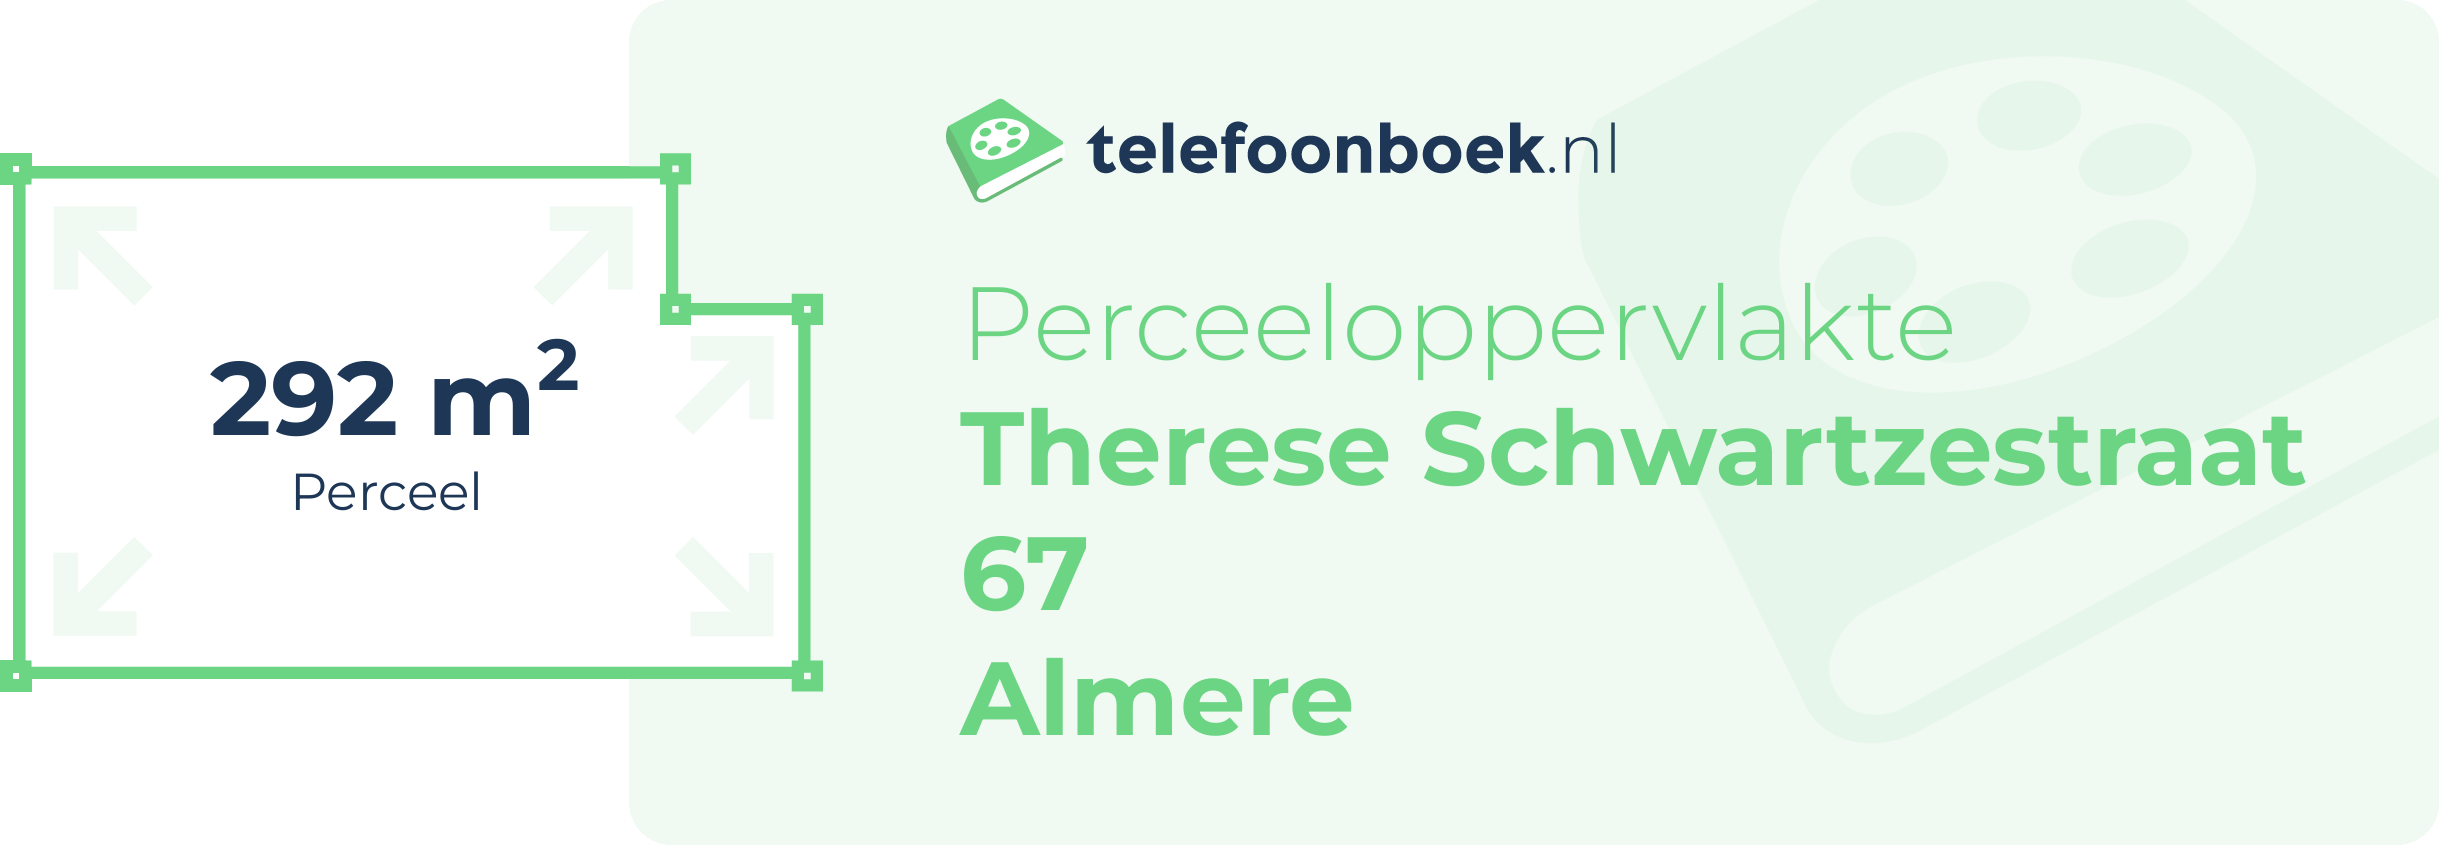 Perceeloppervlakte Therese Schwartzestraat 67 Almere